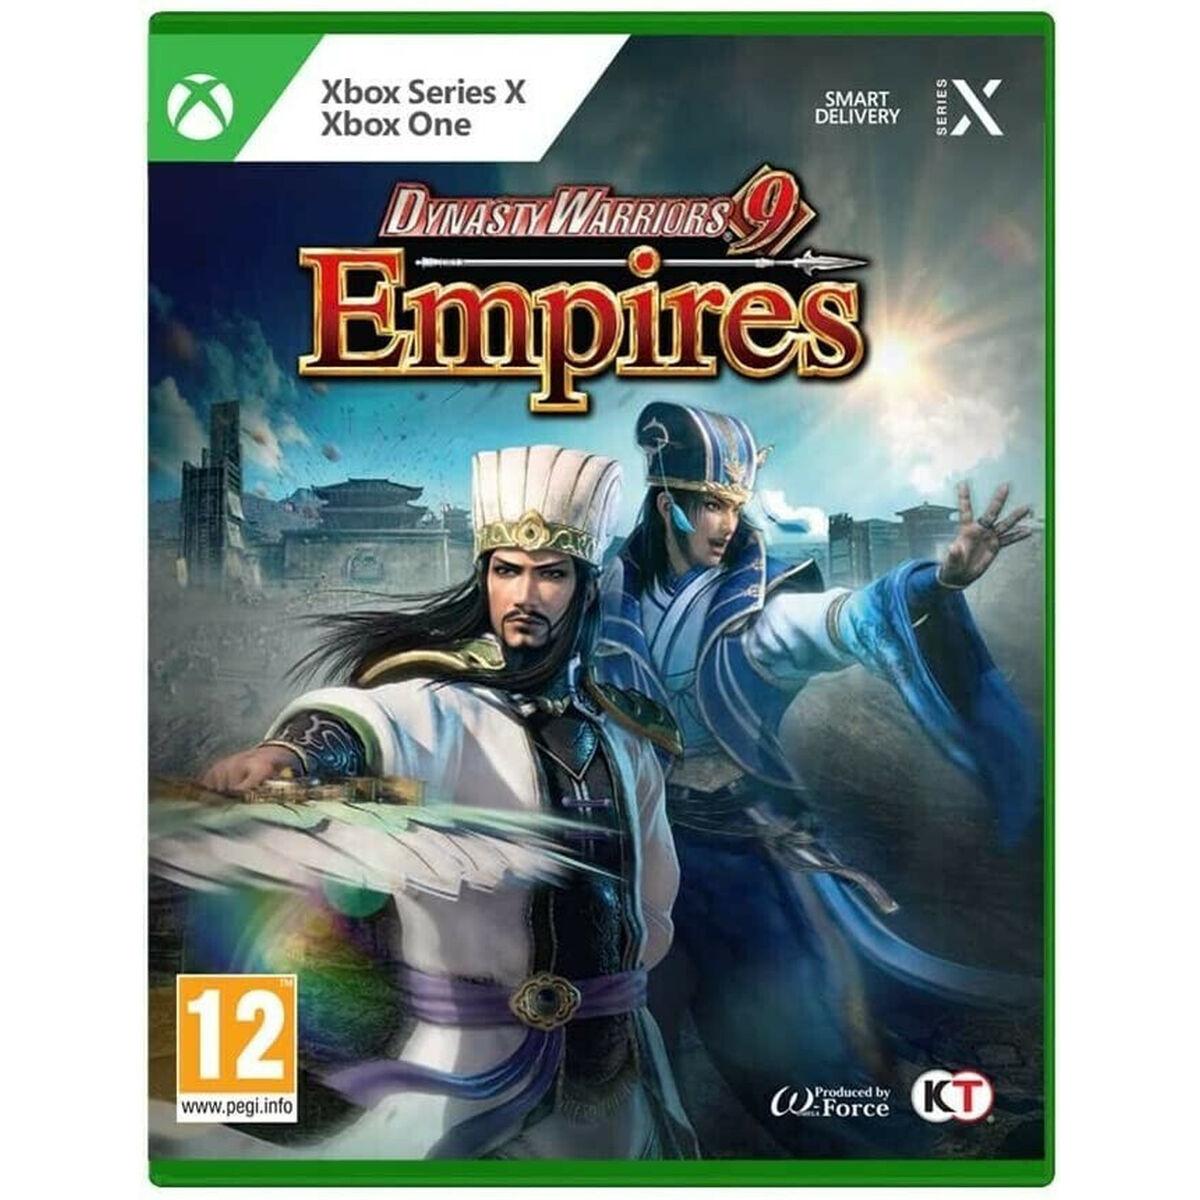 Køb Xbox One spil Tecmo Dynasty Warriors 9 Empires fra vivas.dk